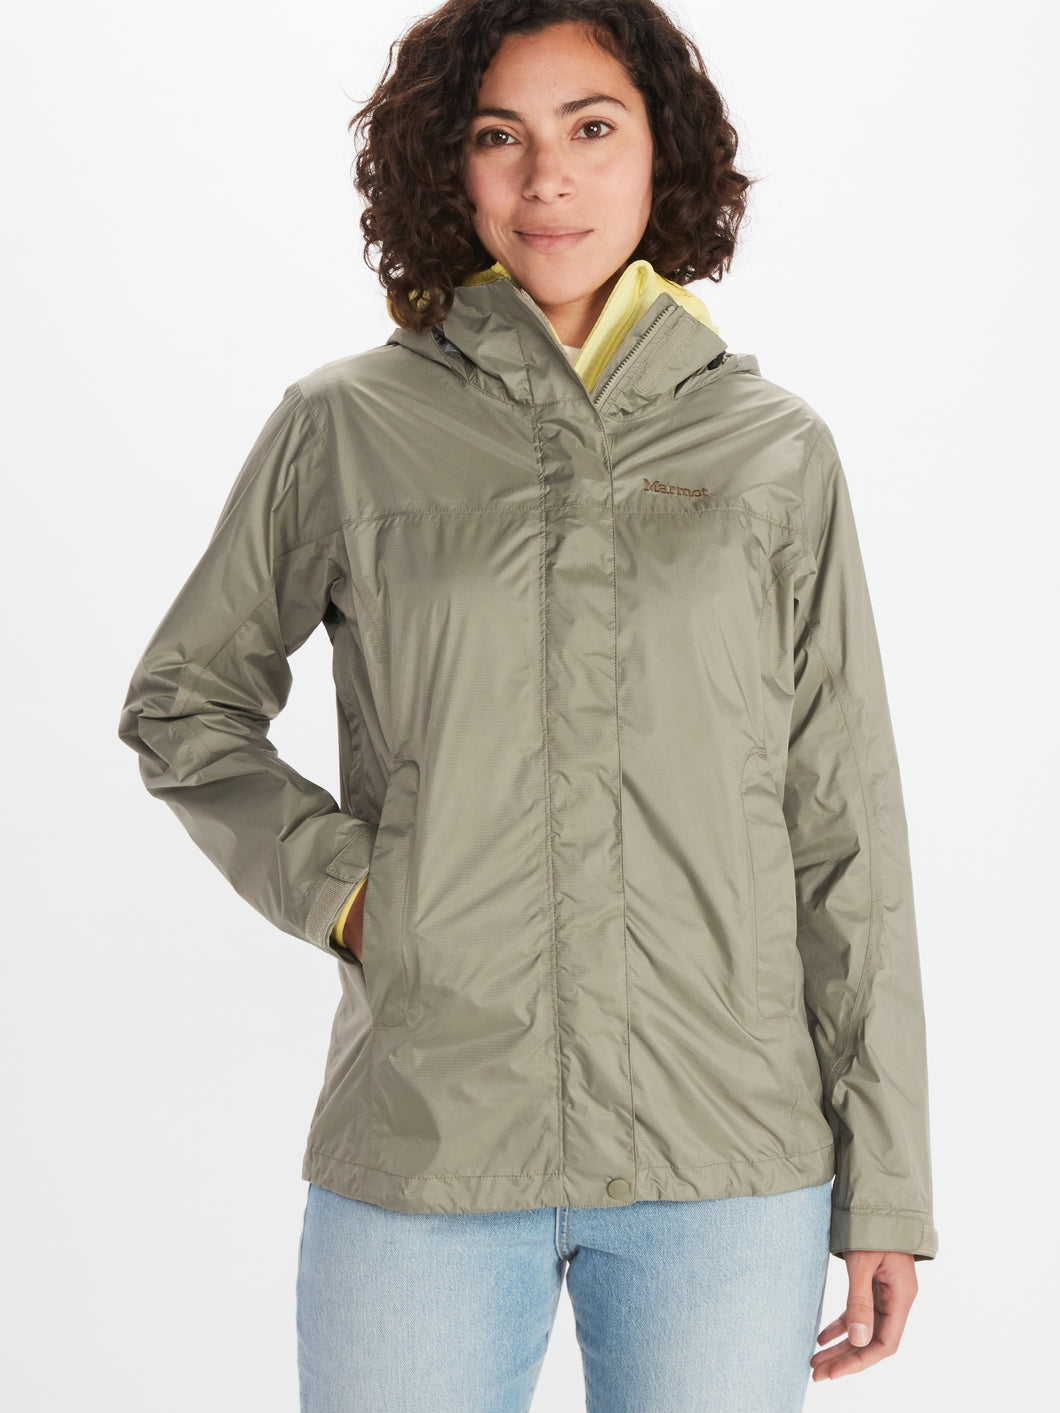 Women's PreCip® Eco Jacket - Vetiver